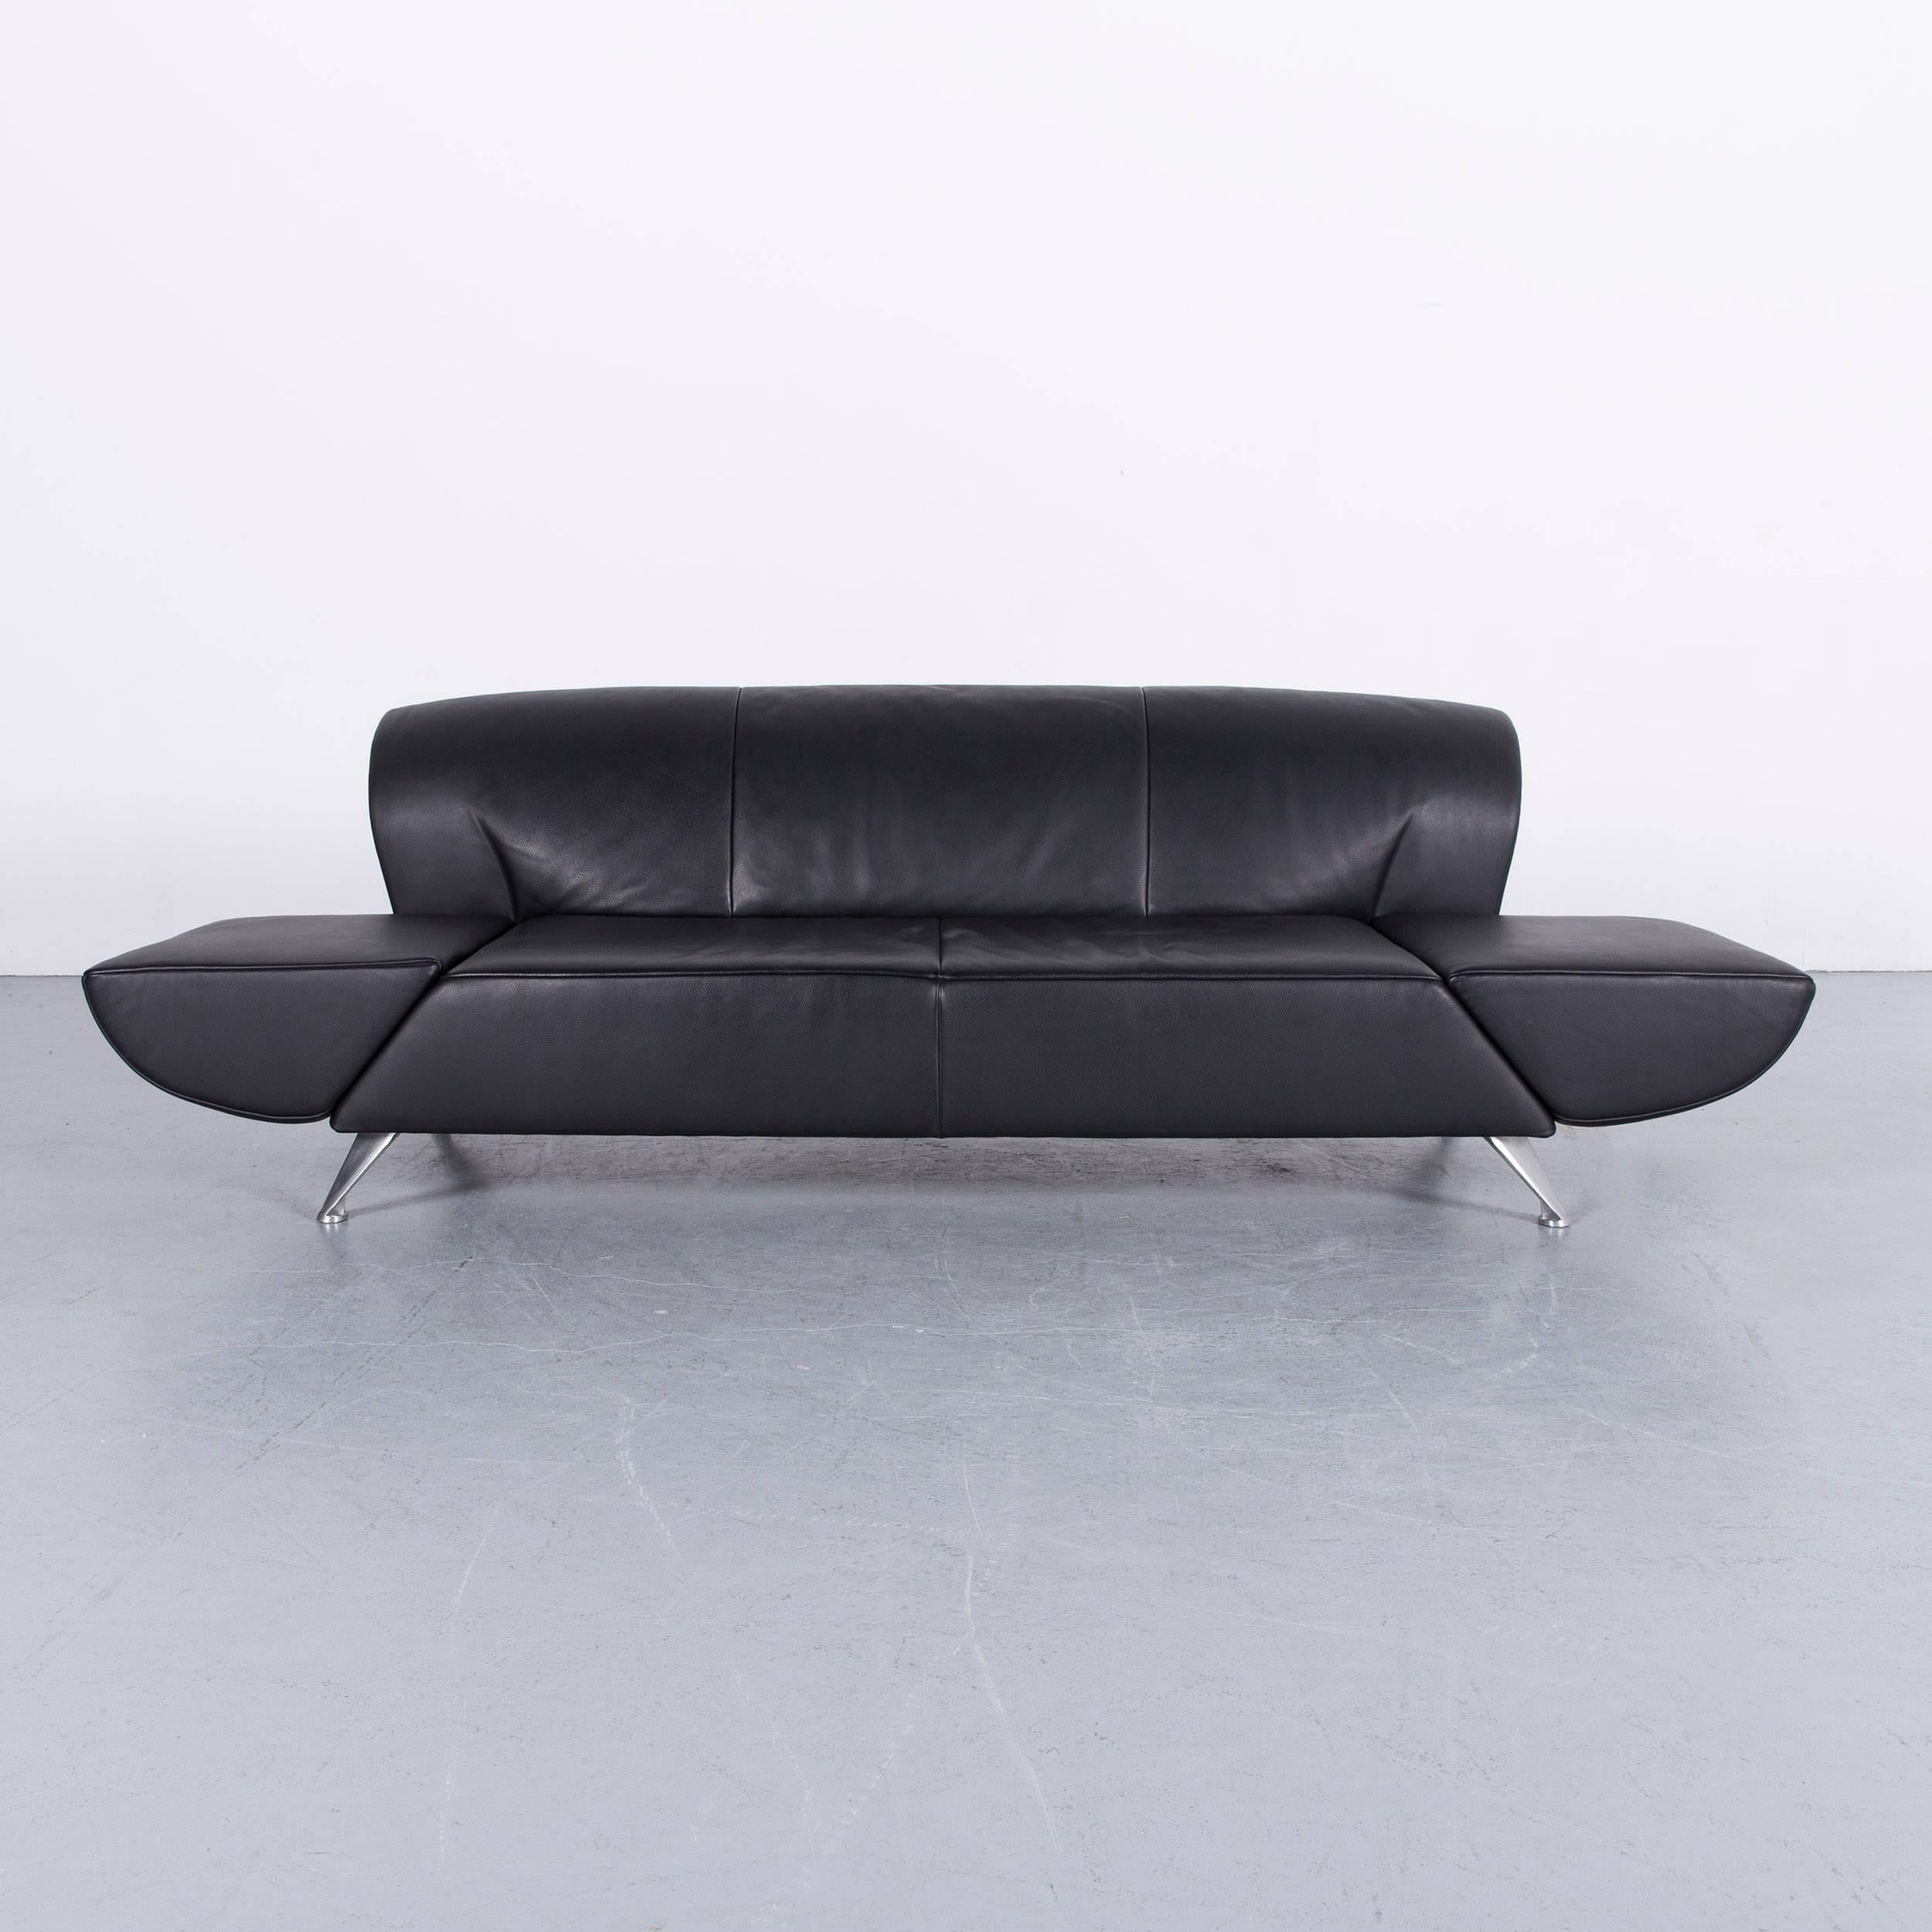 Jori JR 9700 Leather Sofa Black Three-Seat Couch 5